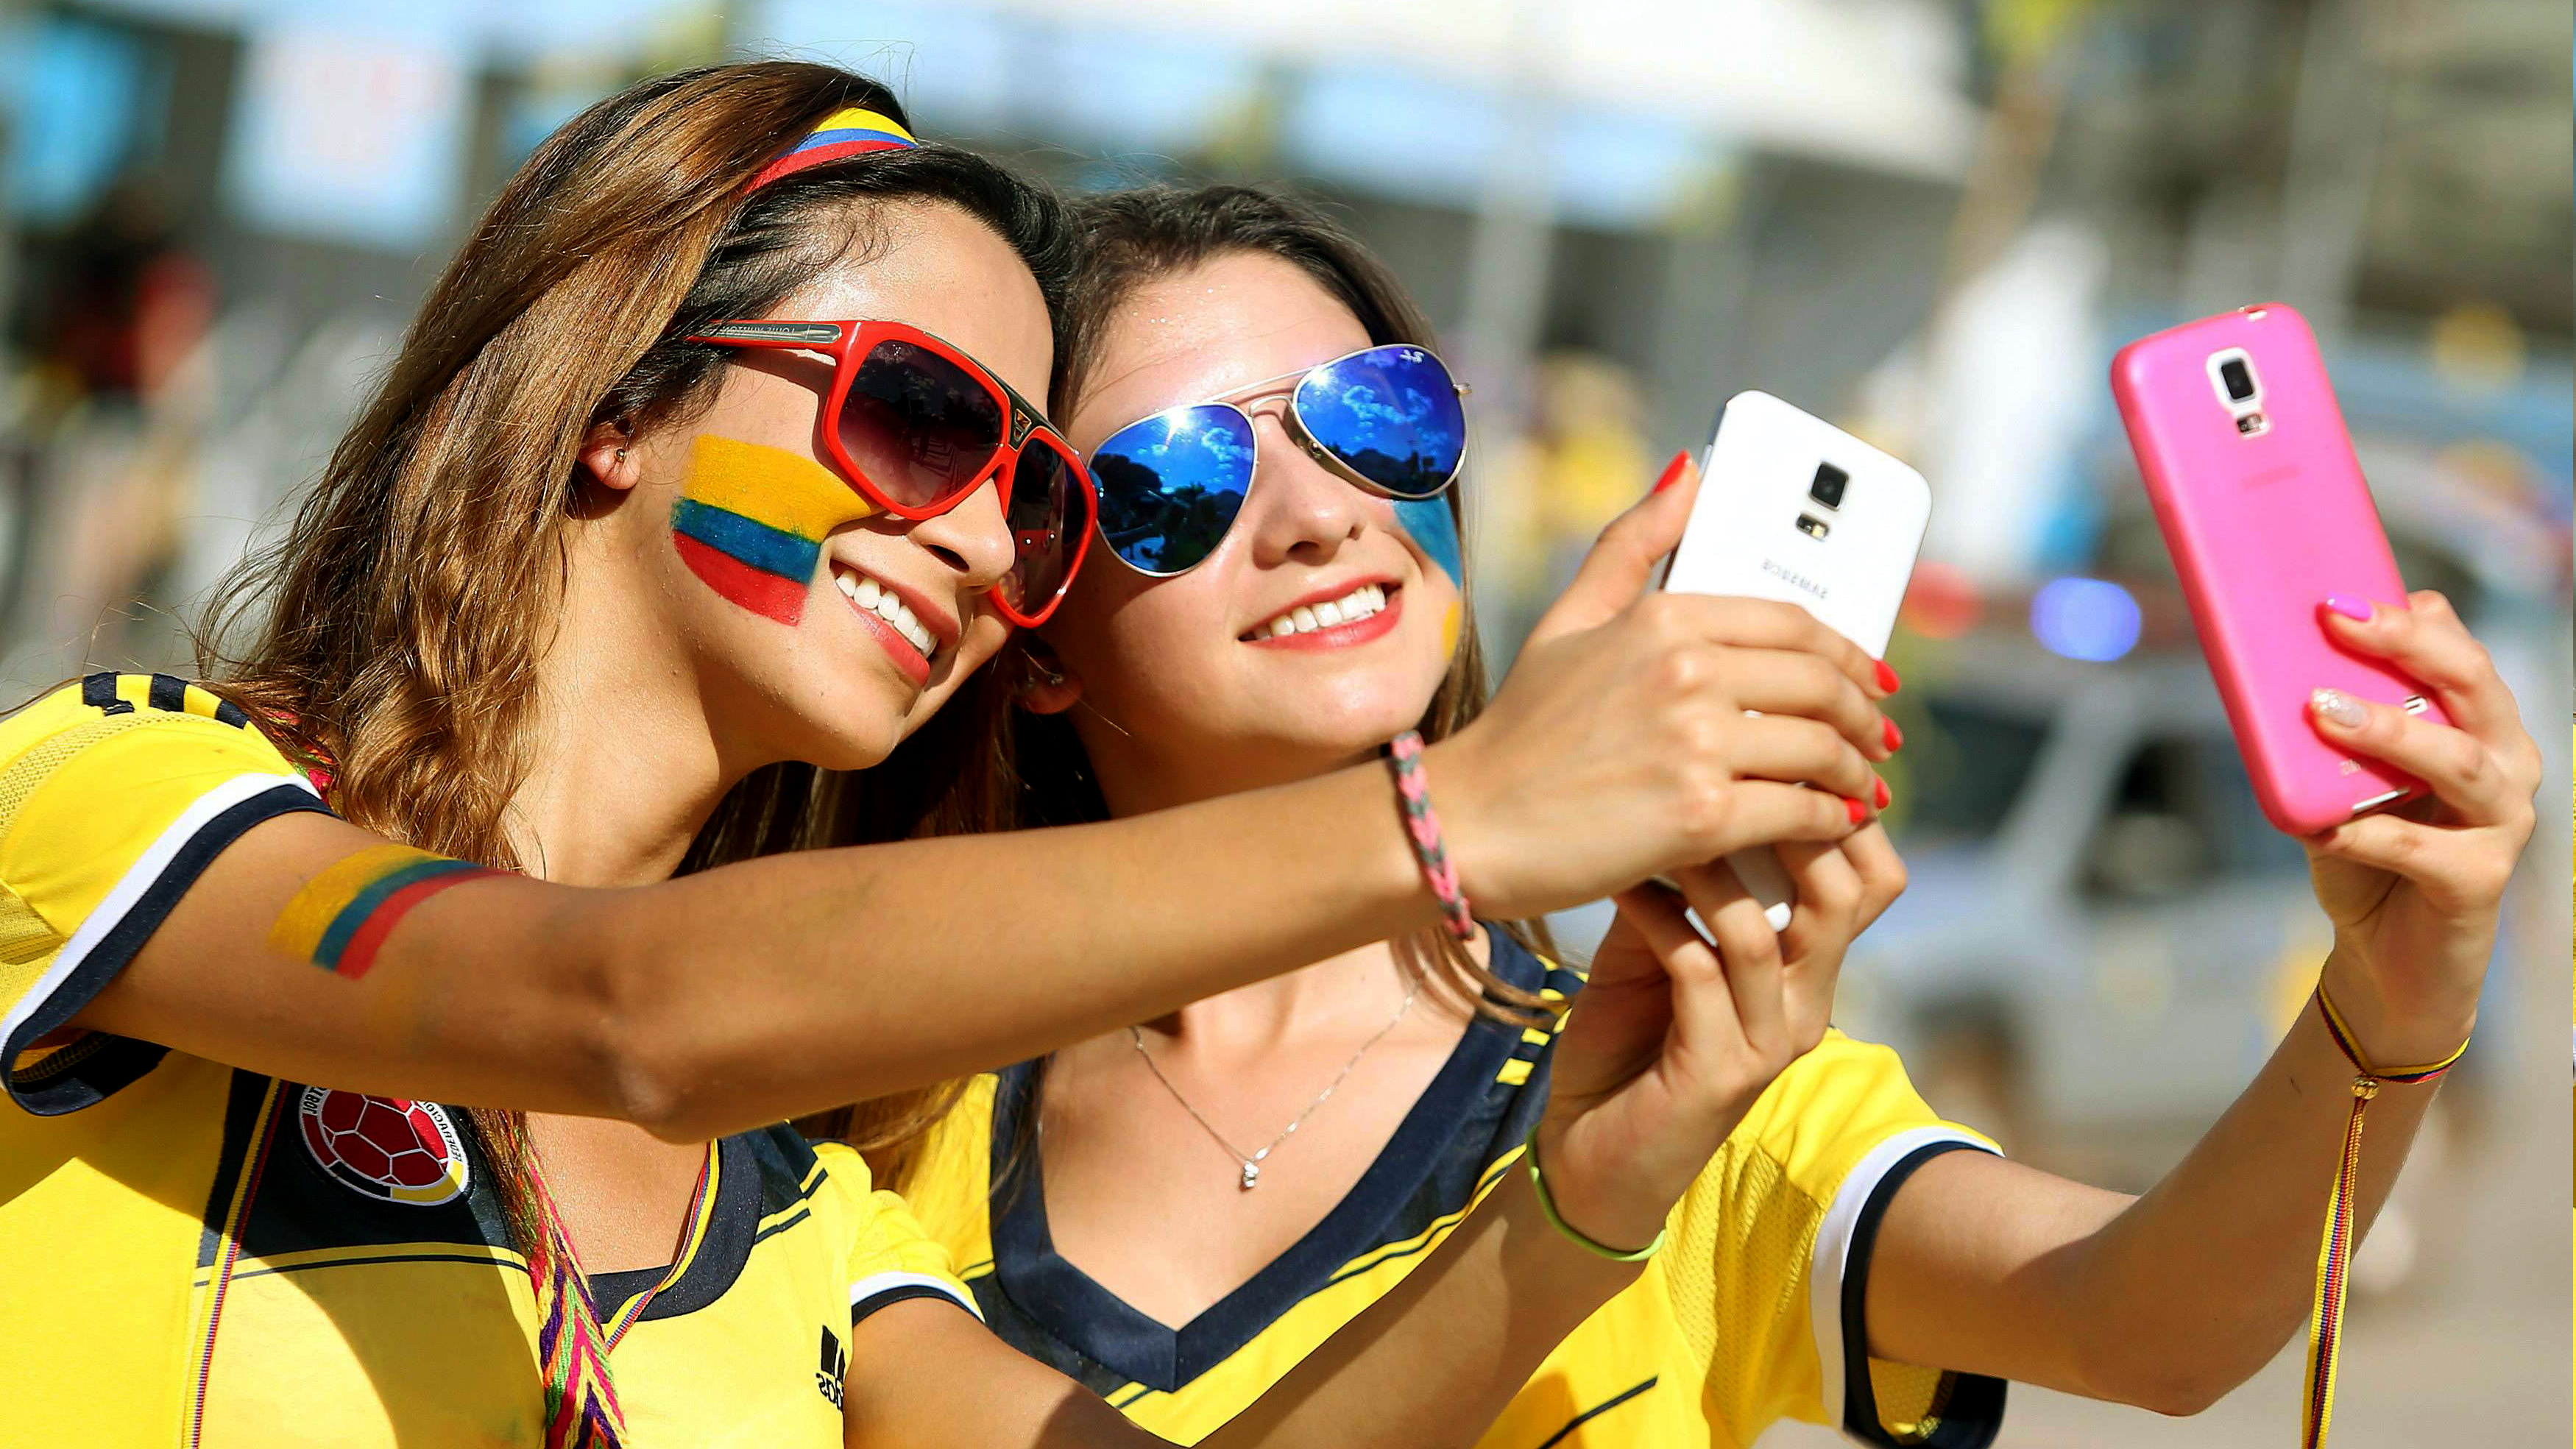 FIFA World Cup, Women, Selfies, Sunglasses, Smiling, Colombia, Brunette Wallpaper